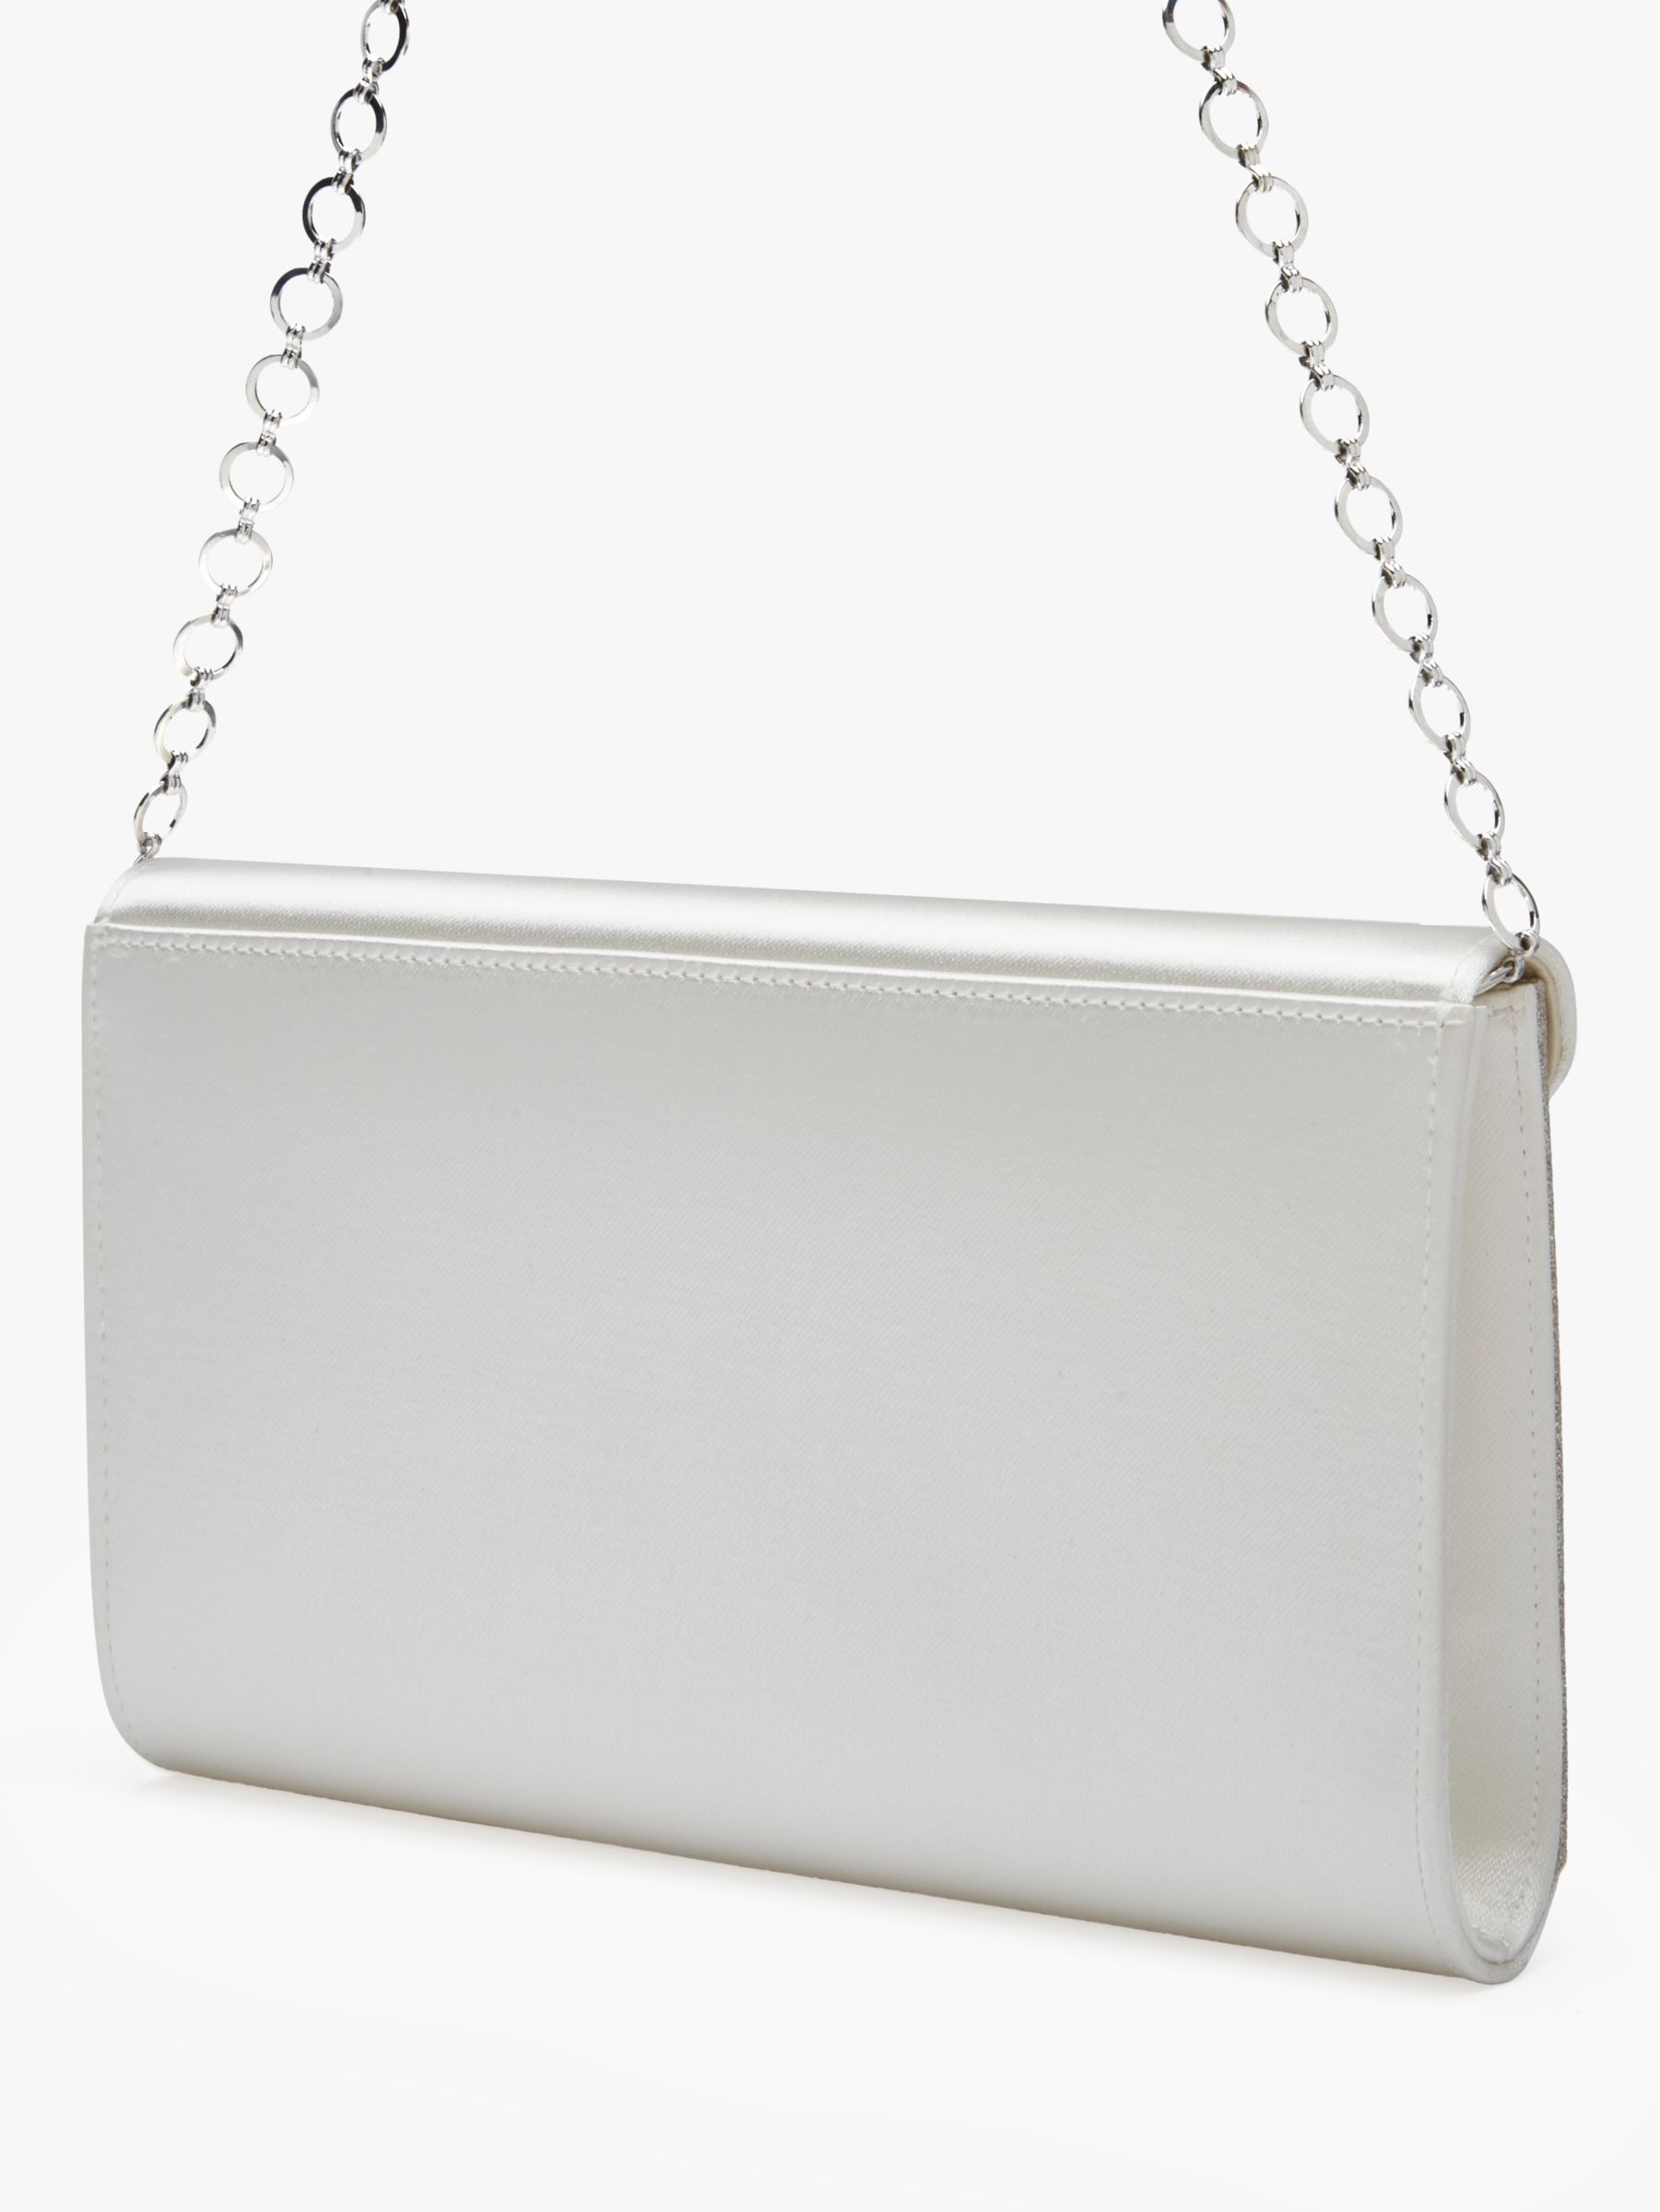 Jack Marc Crossbody Bag Women's Bags Fashion Chain Bright Diamond Saddle Bag Silver